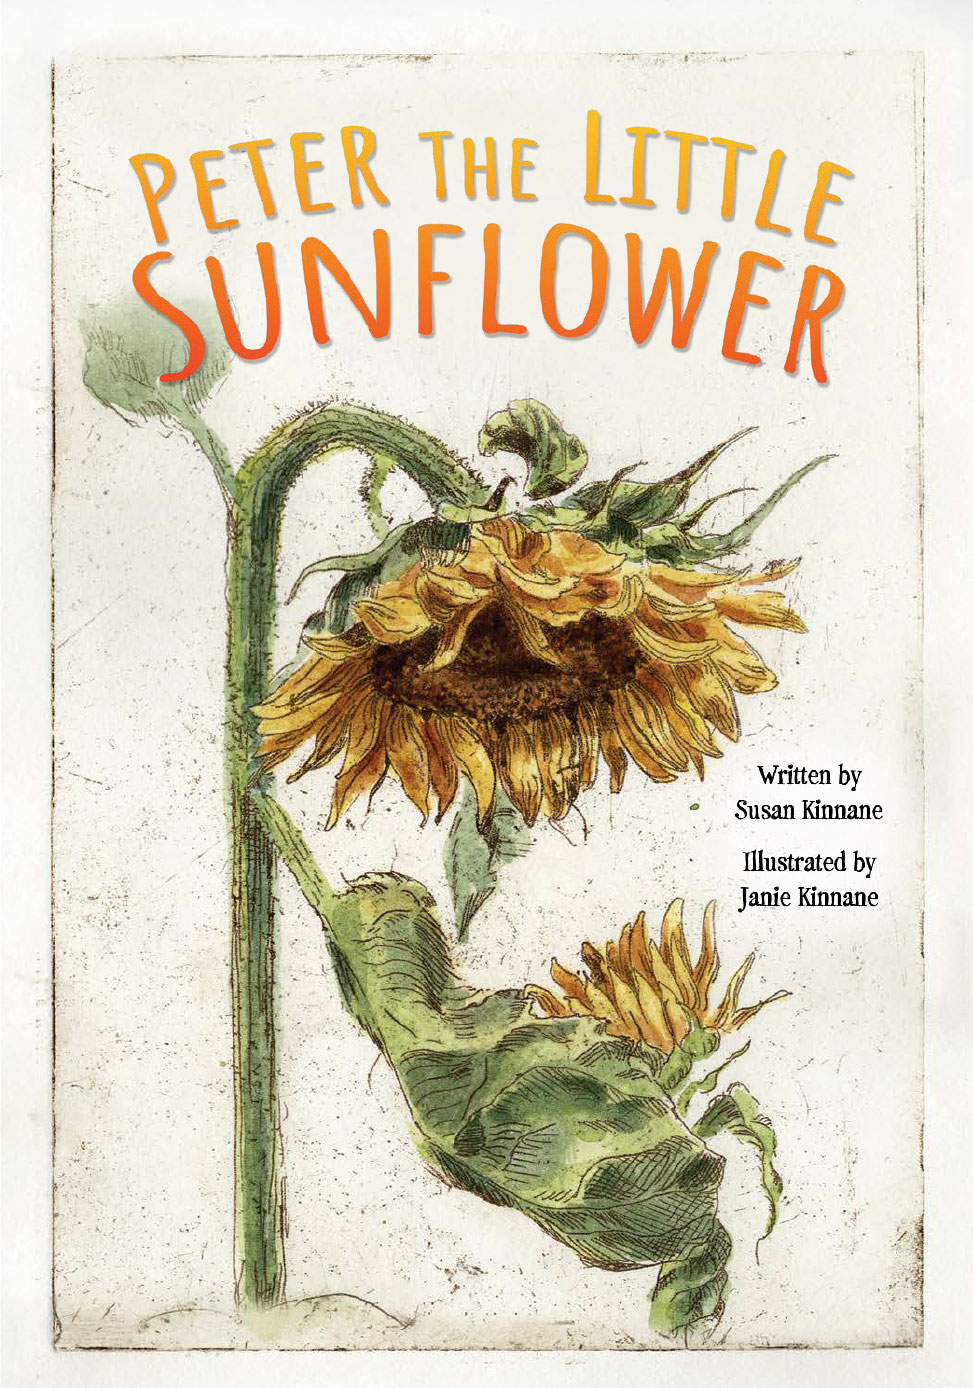 Peter the Little Sunflower by Susan Kinnane Book Cover 